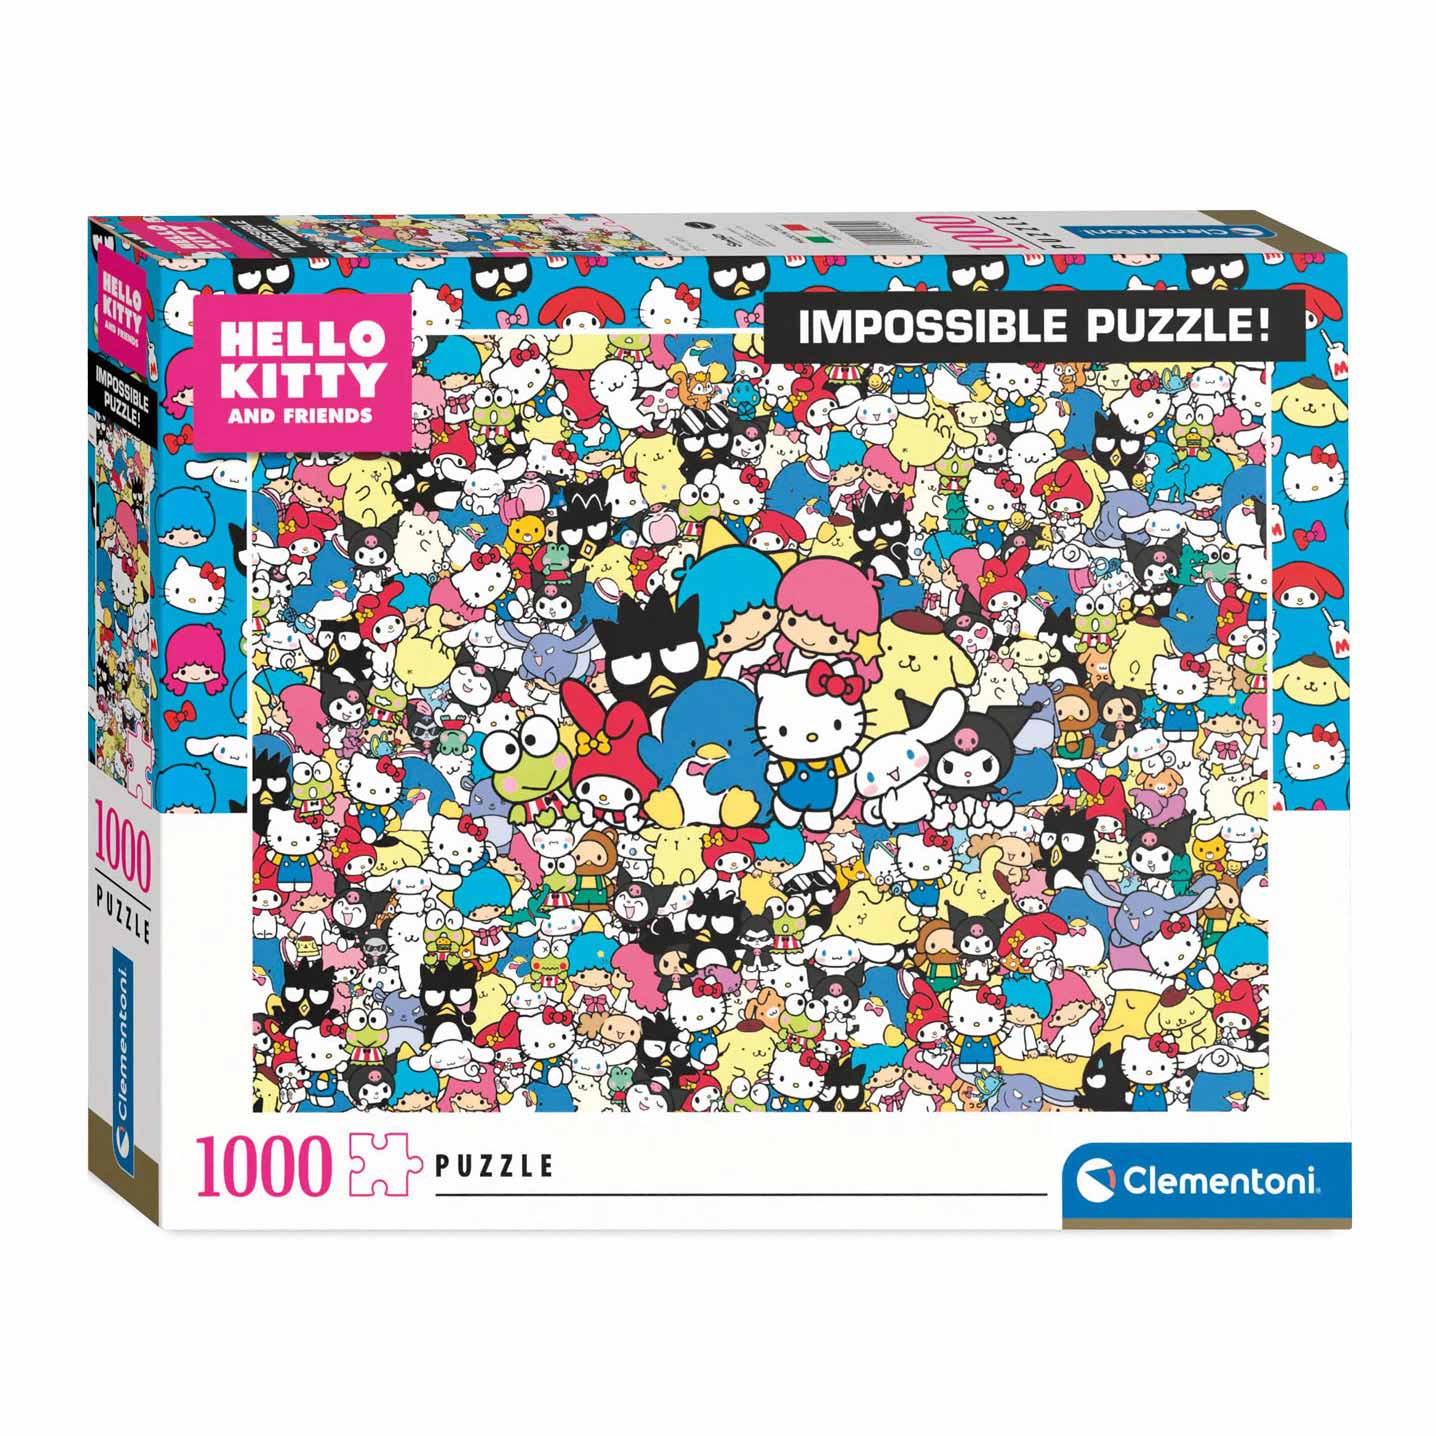 toernooi groet Mededogen Clementoni Impossible Puzzle Hello Kitty, 1000pcs. | Thimble Toys